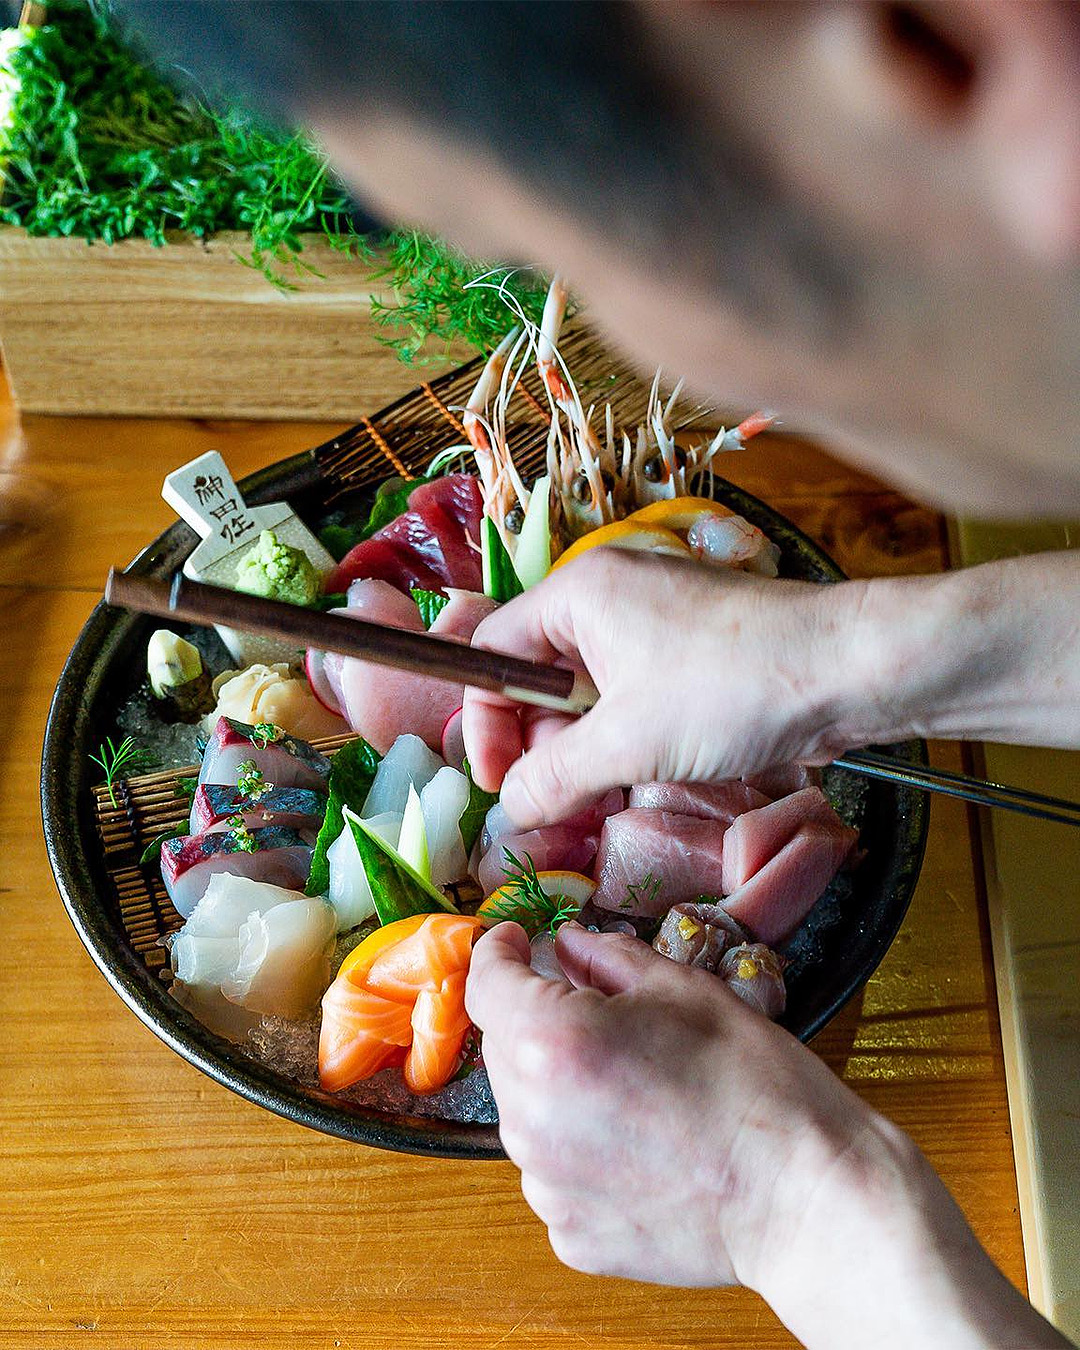 Makoto puts the finishing touches on a huge sashimi platter at Cocoro.